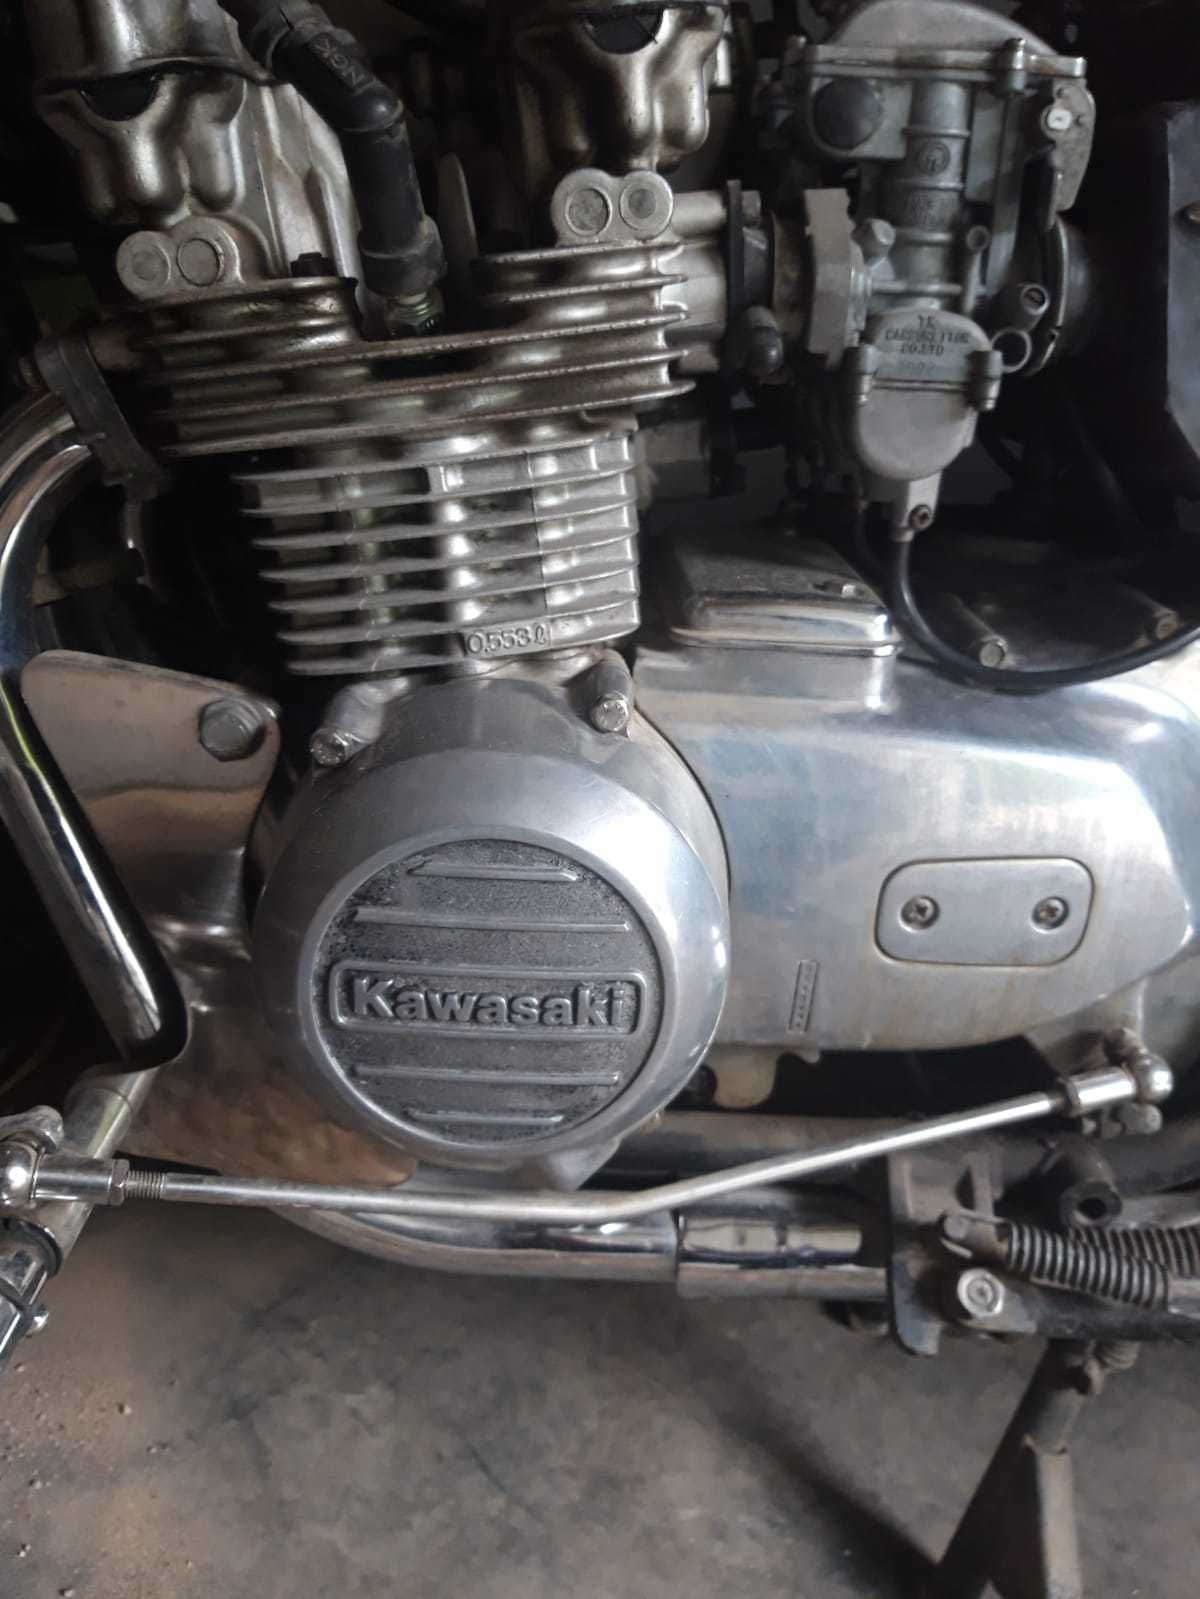 Motocykl Kawasaki model KZ 550B